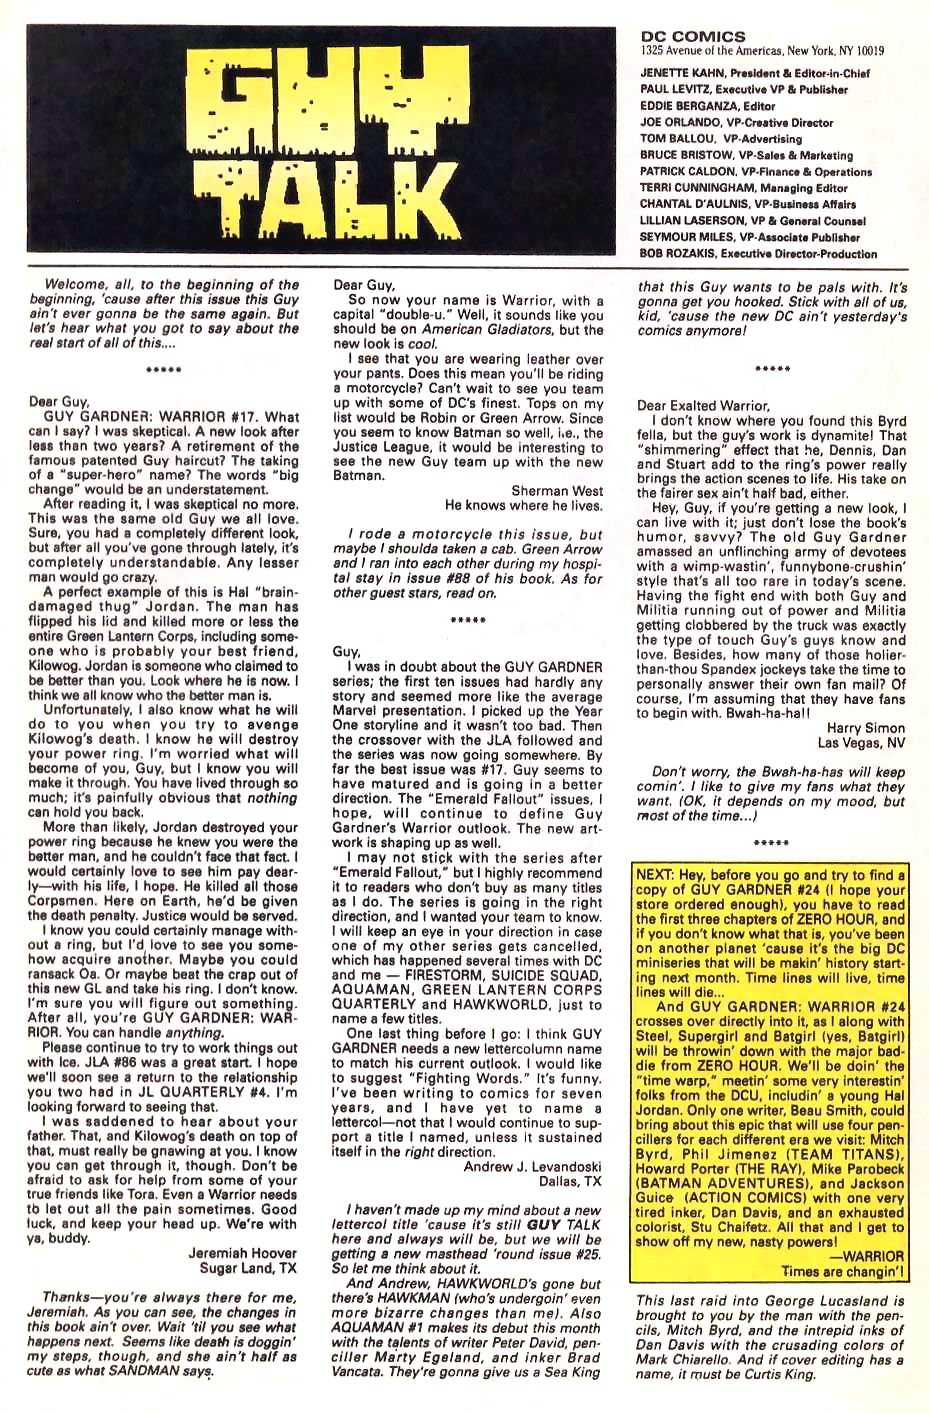 Read online Guy Gardner: Warrior comic -  Issue #23 - 25